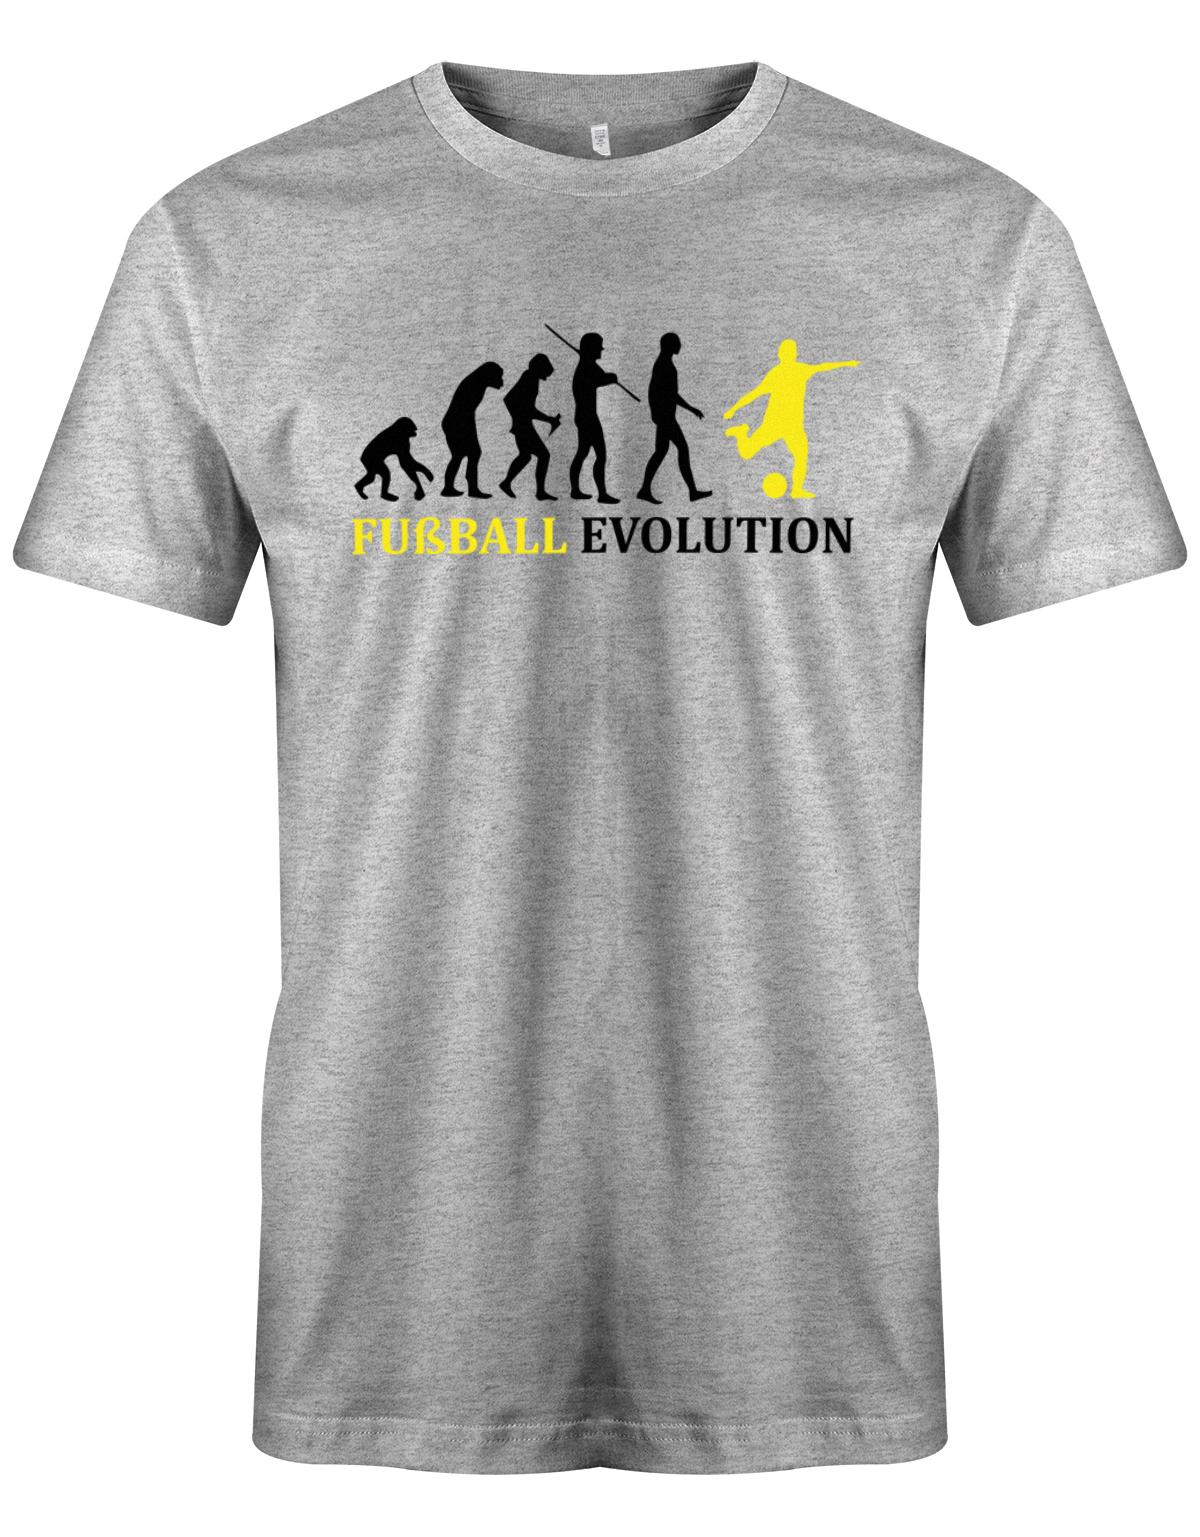 Fussball-Evolution-Herren-Shirt-GRau-Gelb